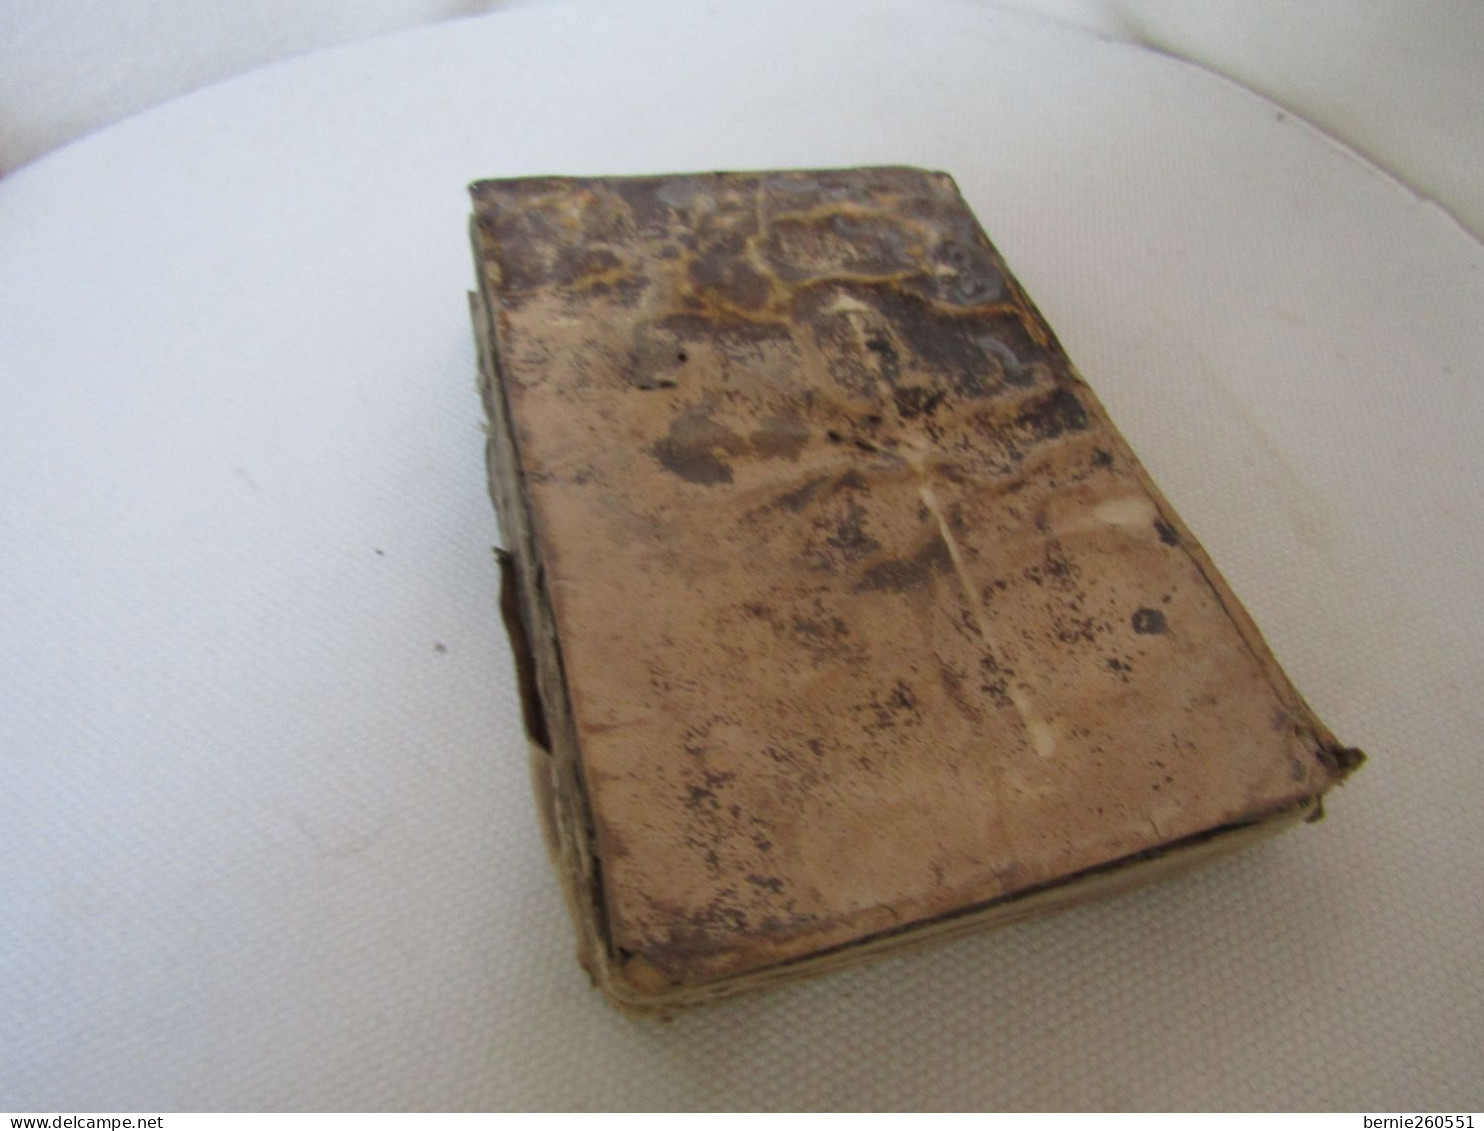 Antique Livre Moeder Godts De 1629, Vieux Flamand - Anciens